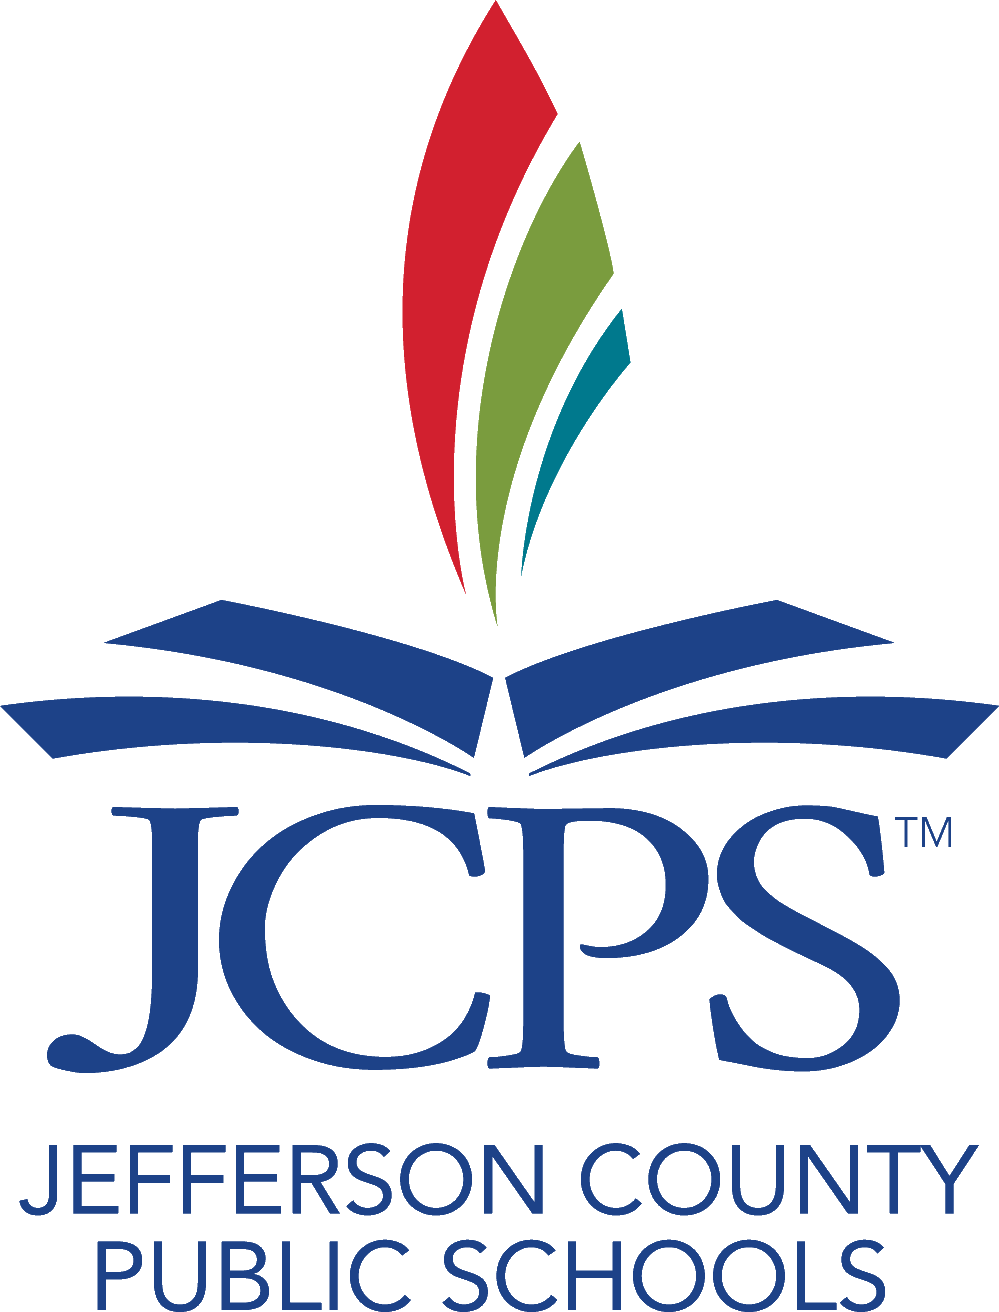 the logo for jefferson county public schools